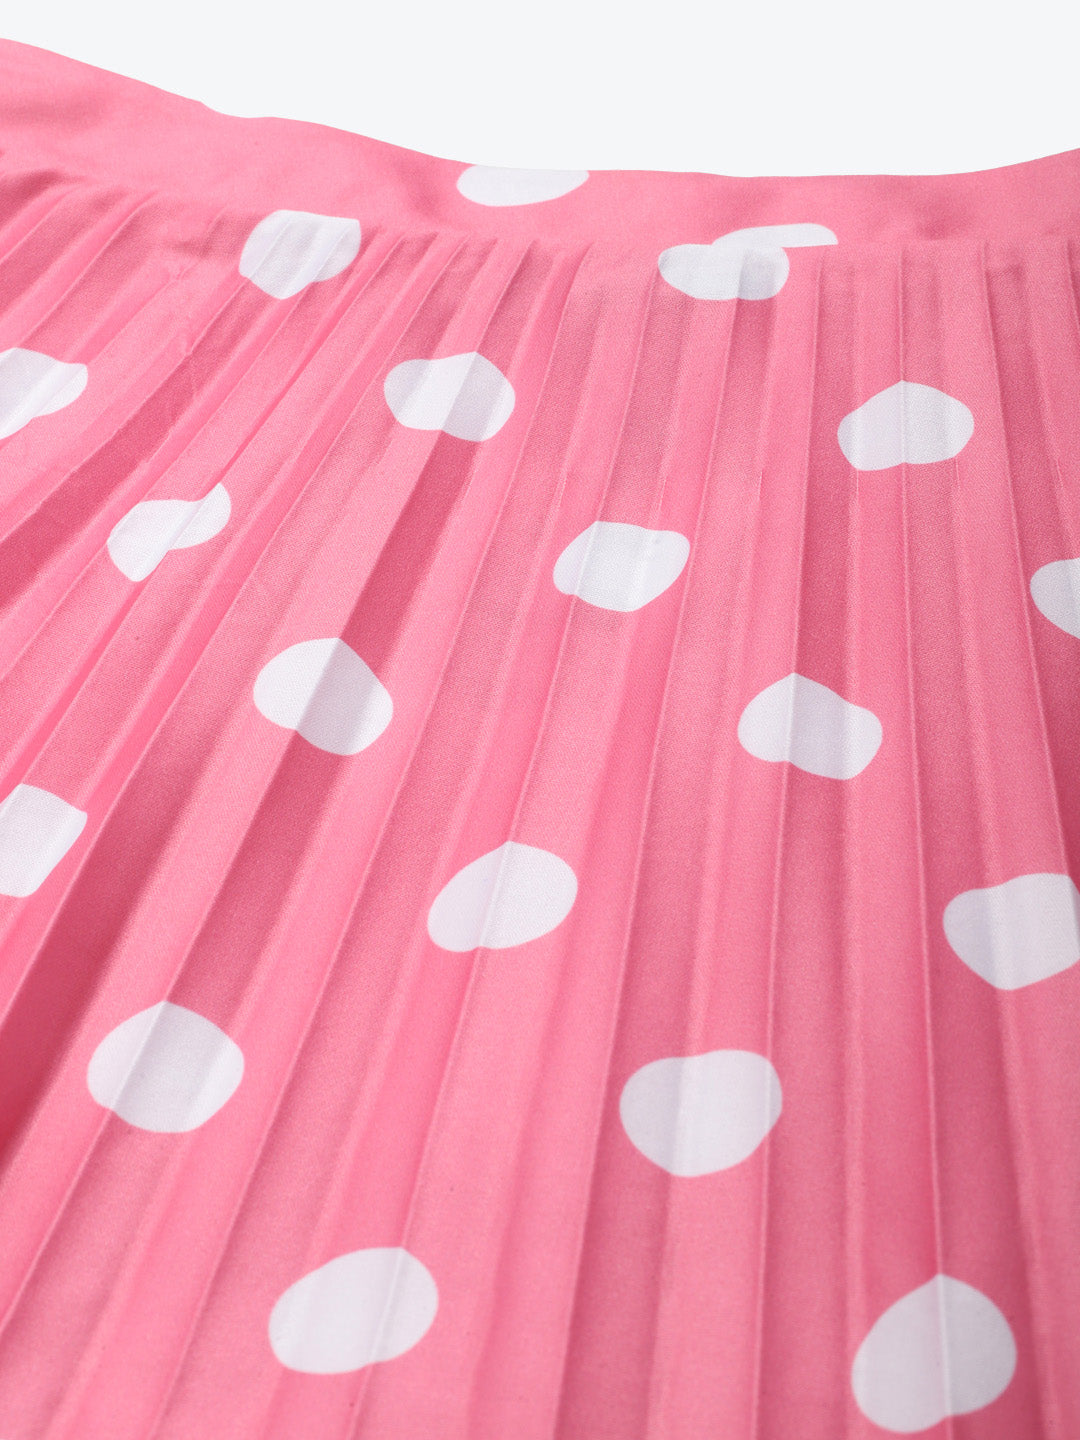 Women Pink With White Polka Dot Asymmetric Pleated Skirt